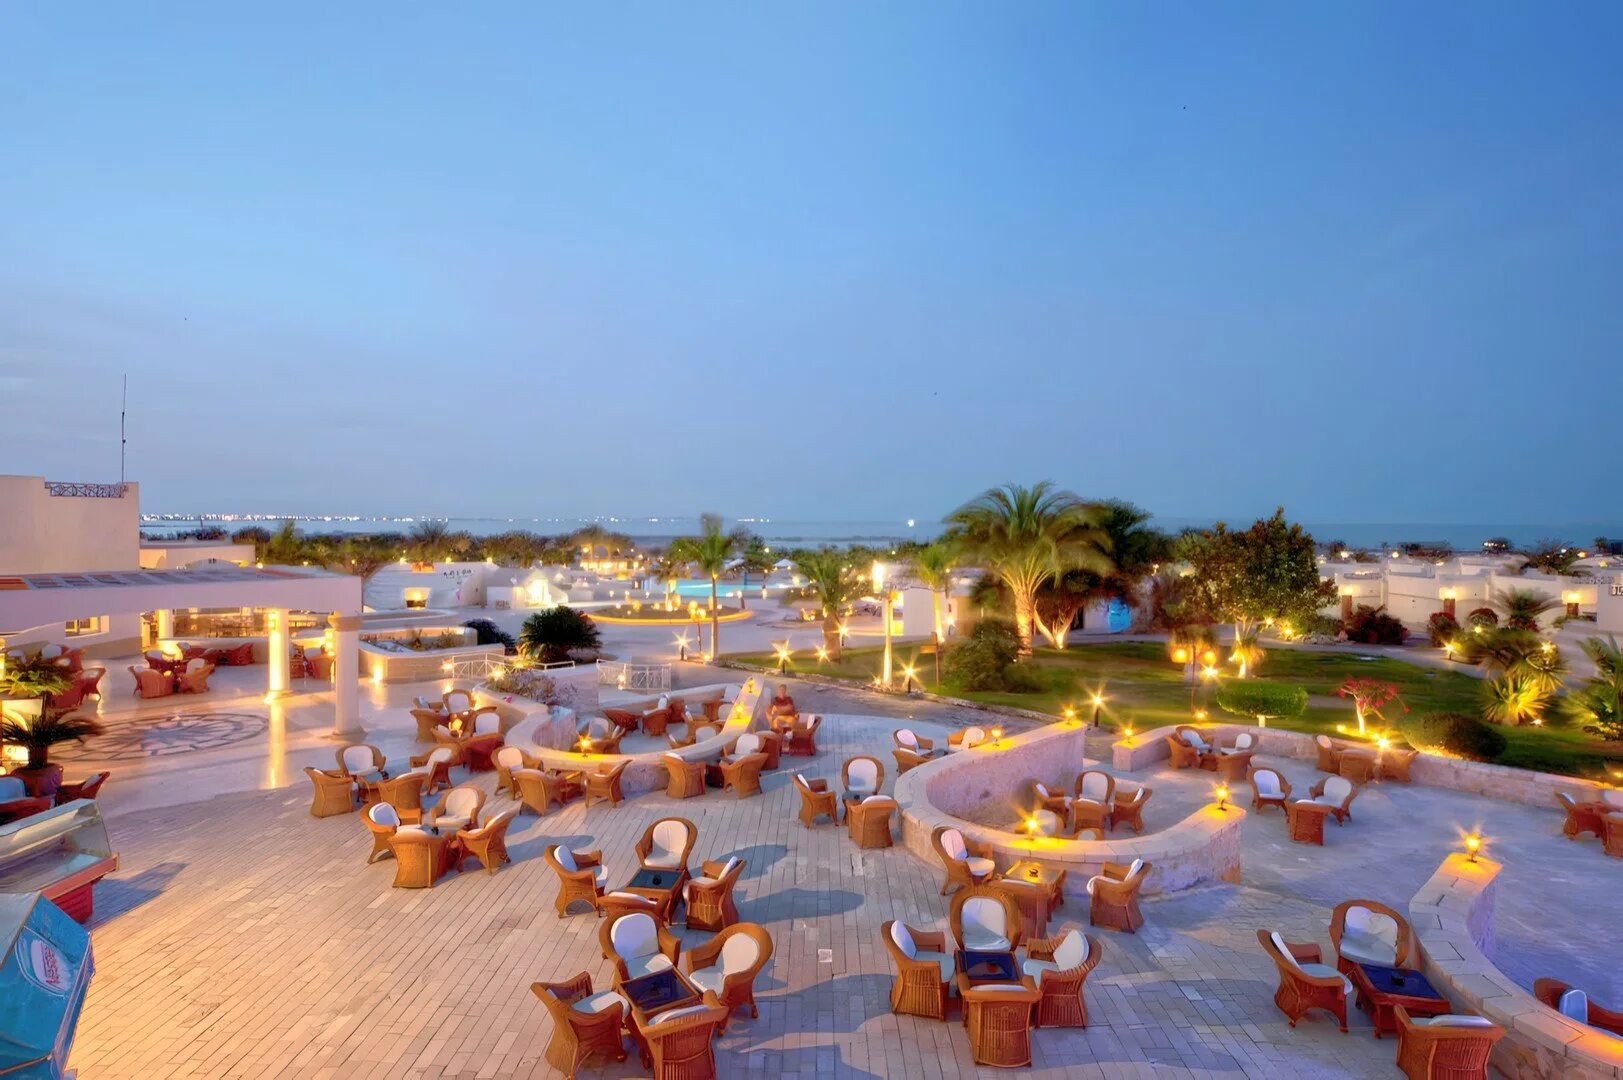 Coral beach rotana resort. Coral Beach Hotel Hurghada Египет Хургада. Корал Бич отель Хургада. Корал Бич Резорт Хургада 4. Египет Хургада отель Корал Бич Резорт 4 звезды.